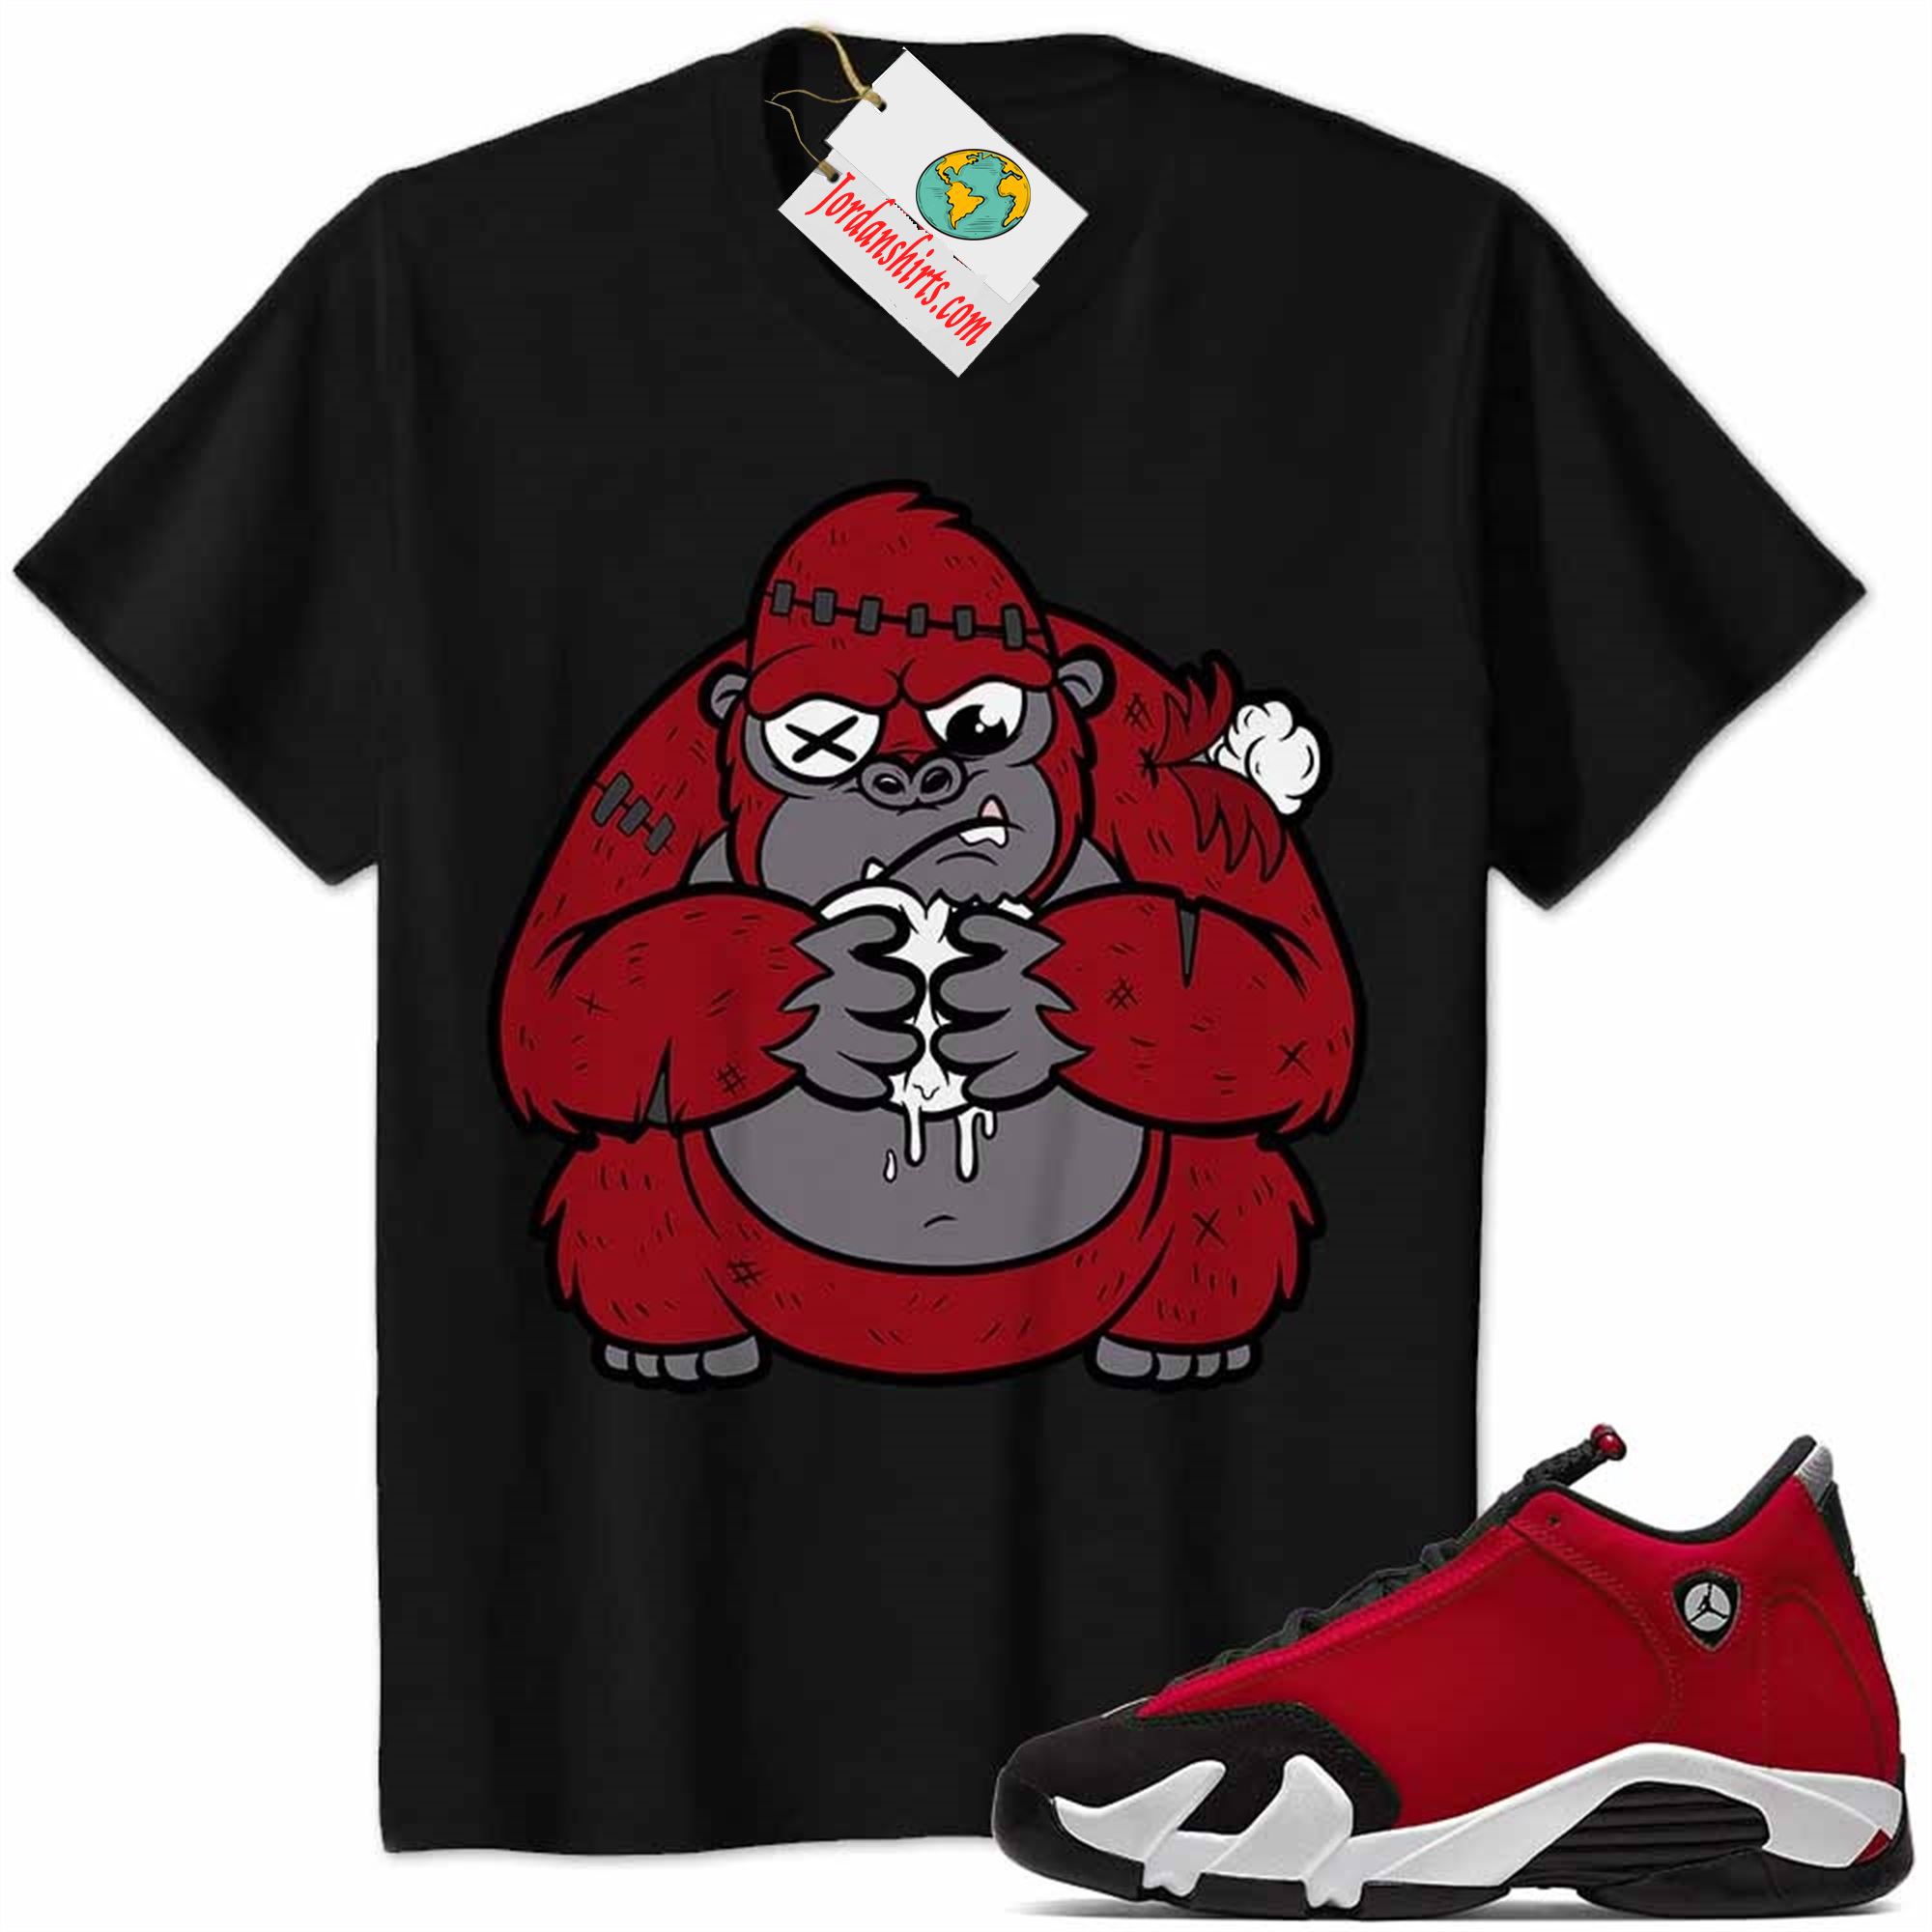 Jordan 14 Shirt, Cute Monkey Broken Heart Black Air Jordan 14 Gym Red 14s Plus Size Up To 5xl